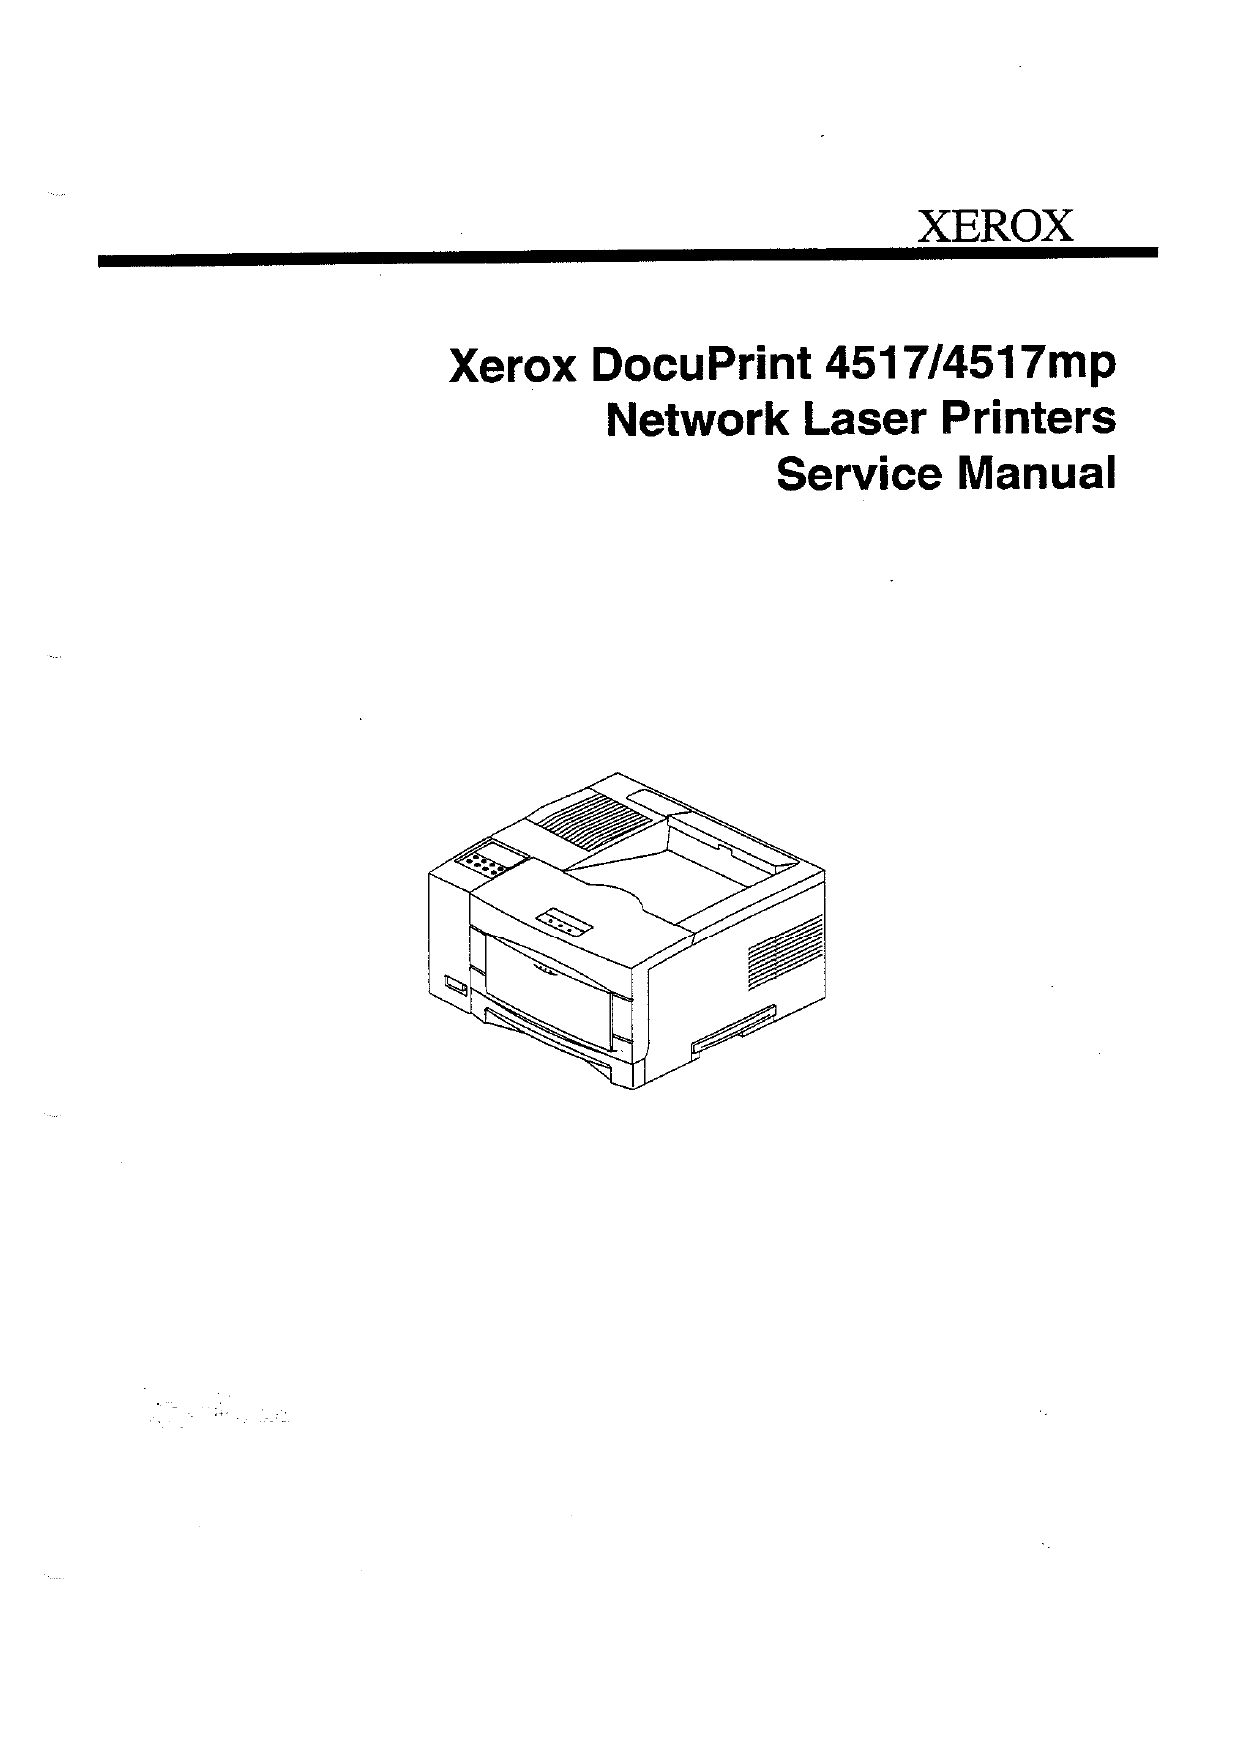 Xerox DocuPrint 4517 4517mp Service Manual-1